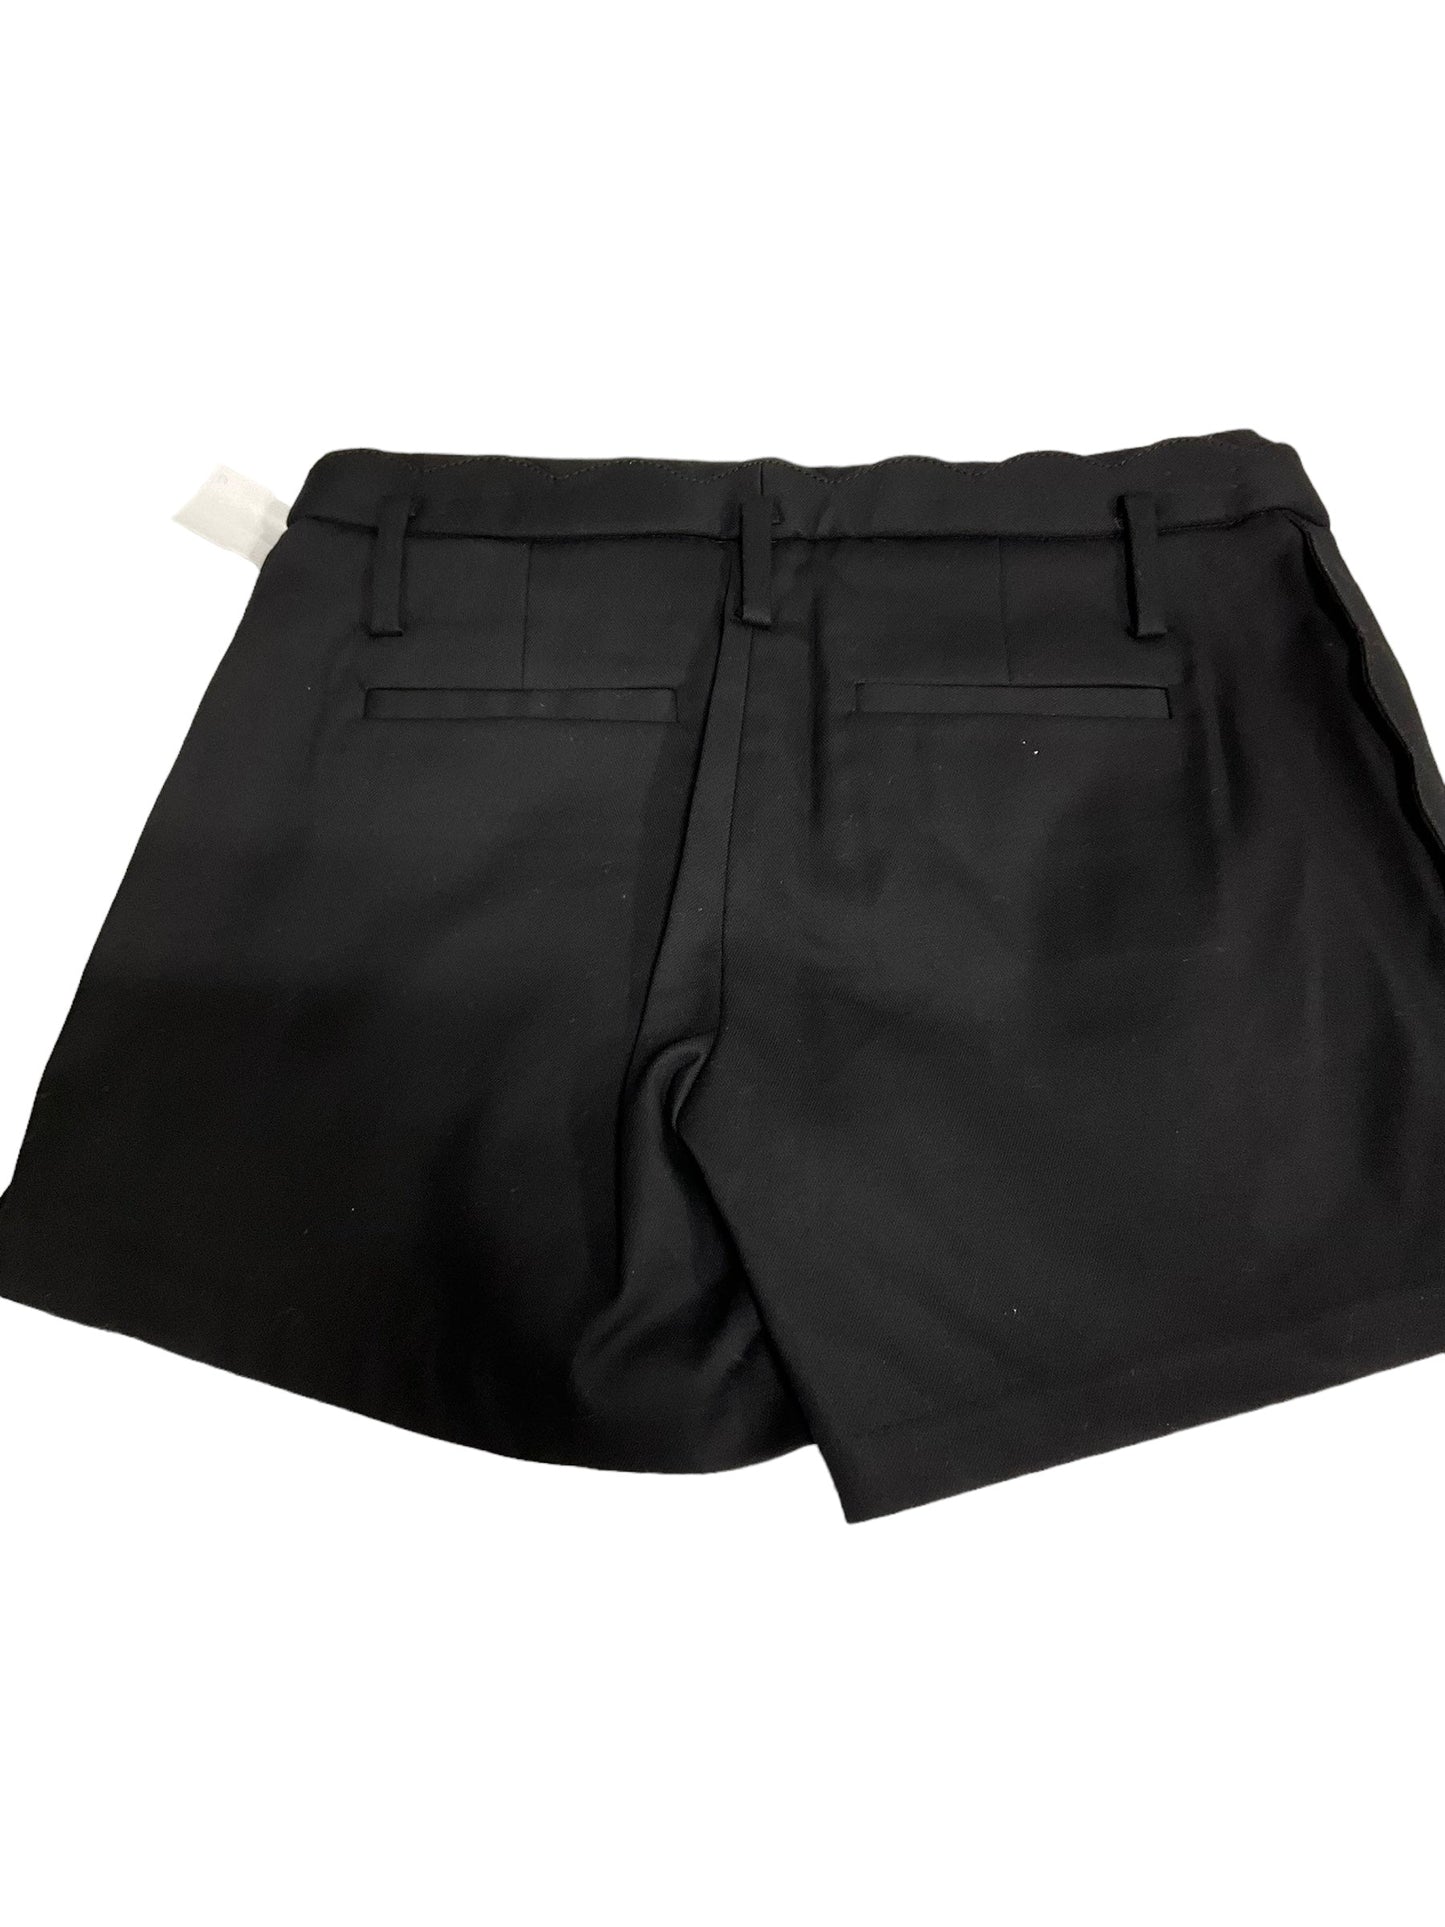 Black Shorts Banana Republic, Size 2